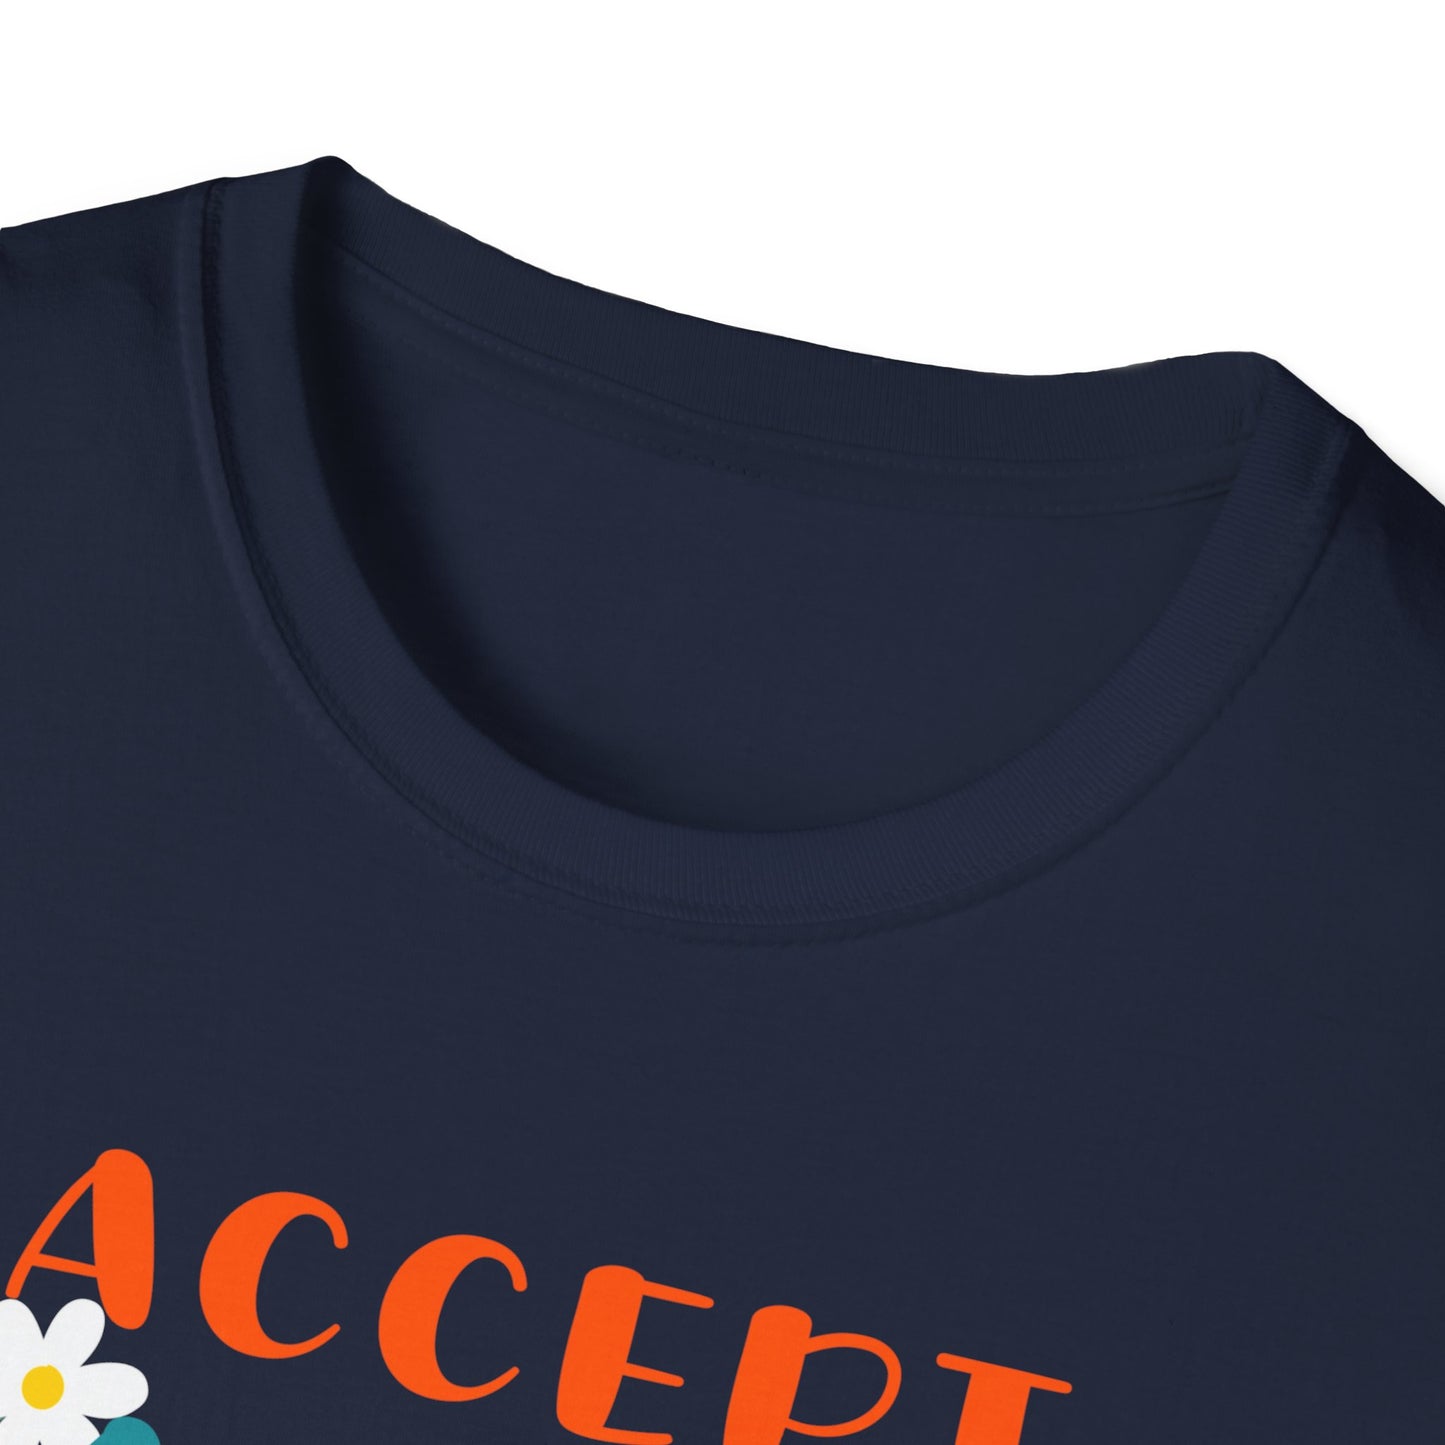 "Accept, Adapt, Advocate" Unisex Softstyle T-Shirt